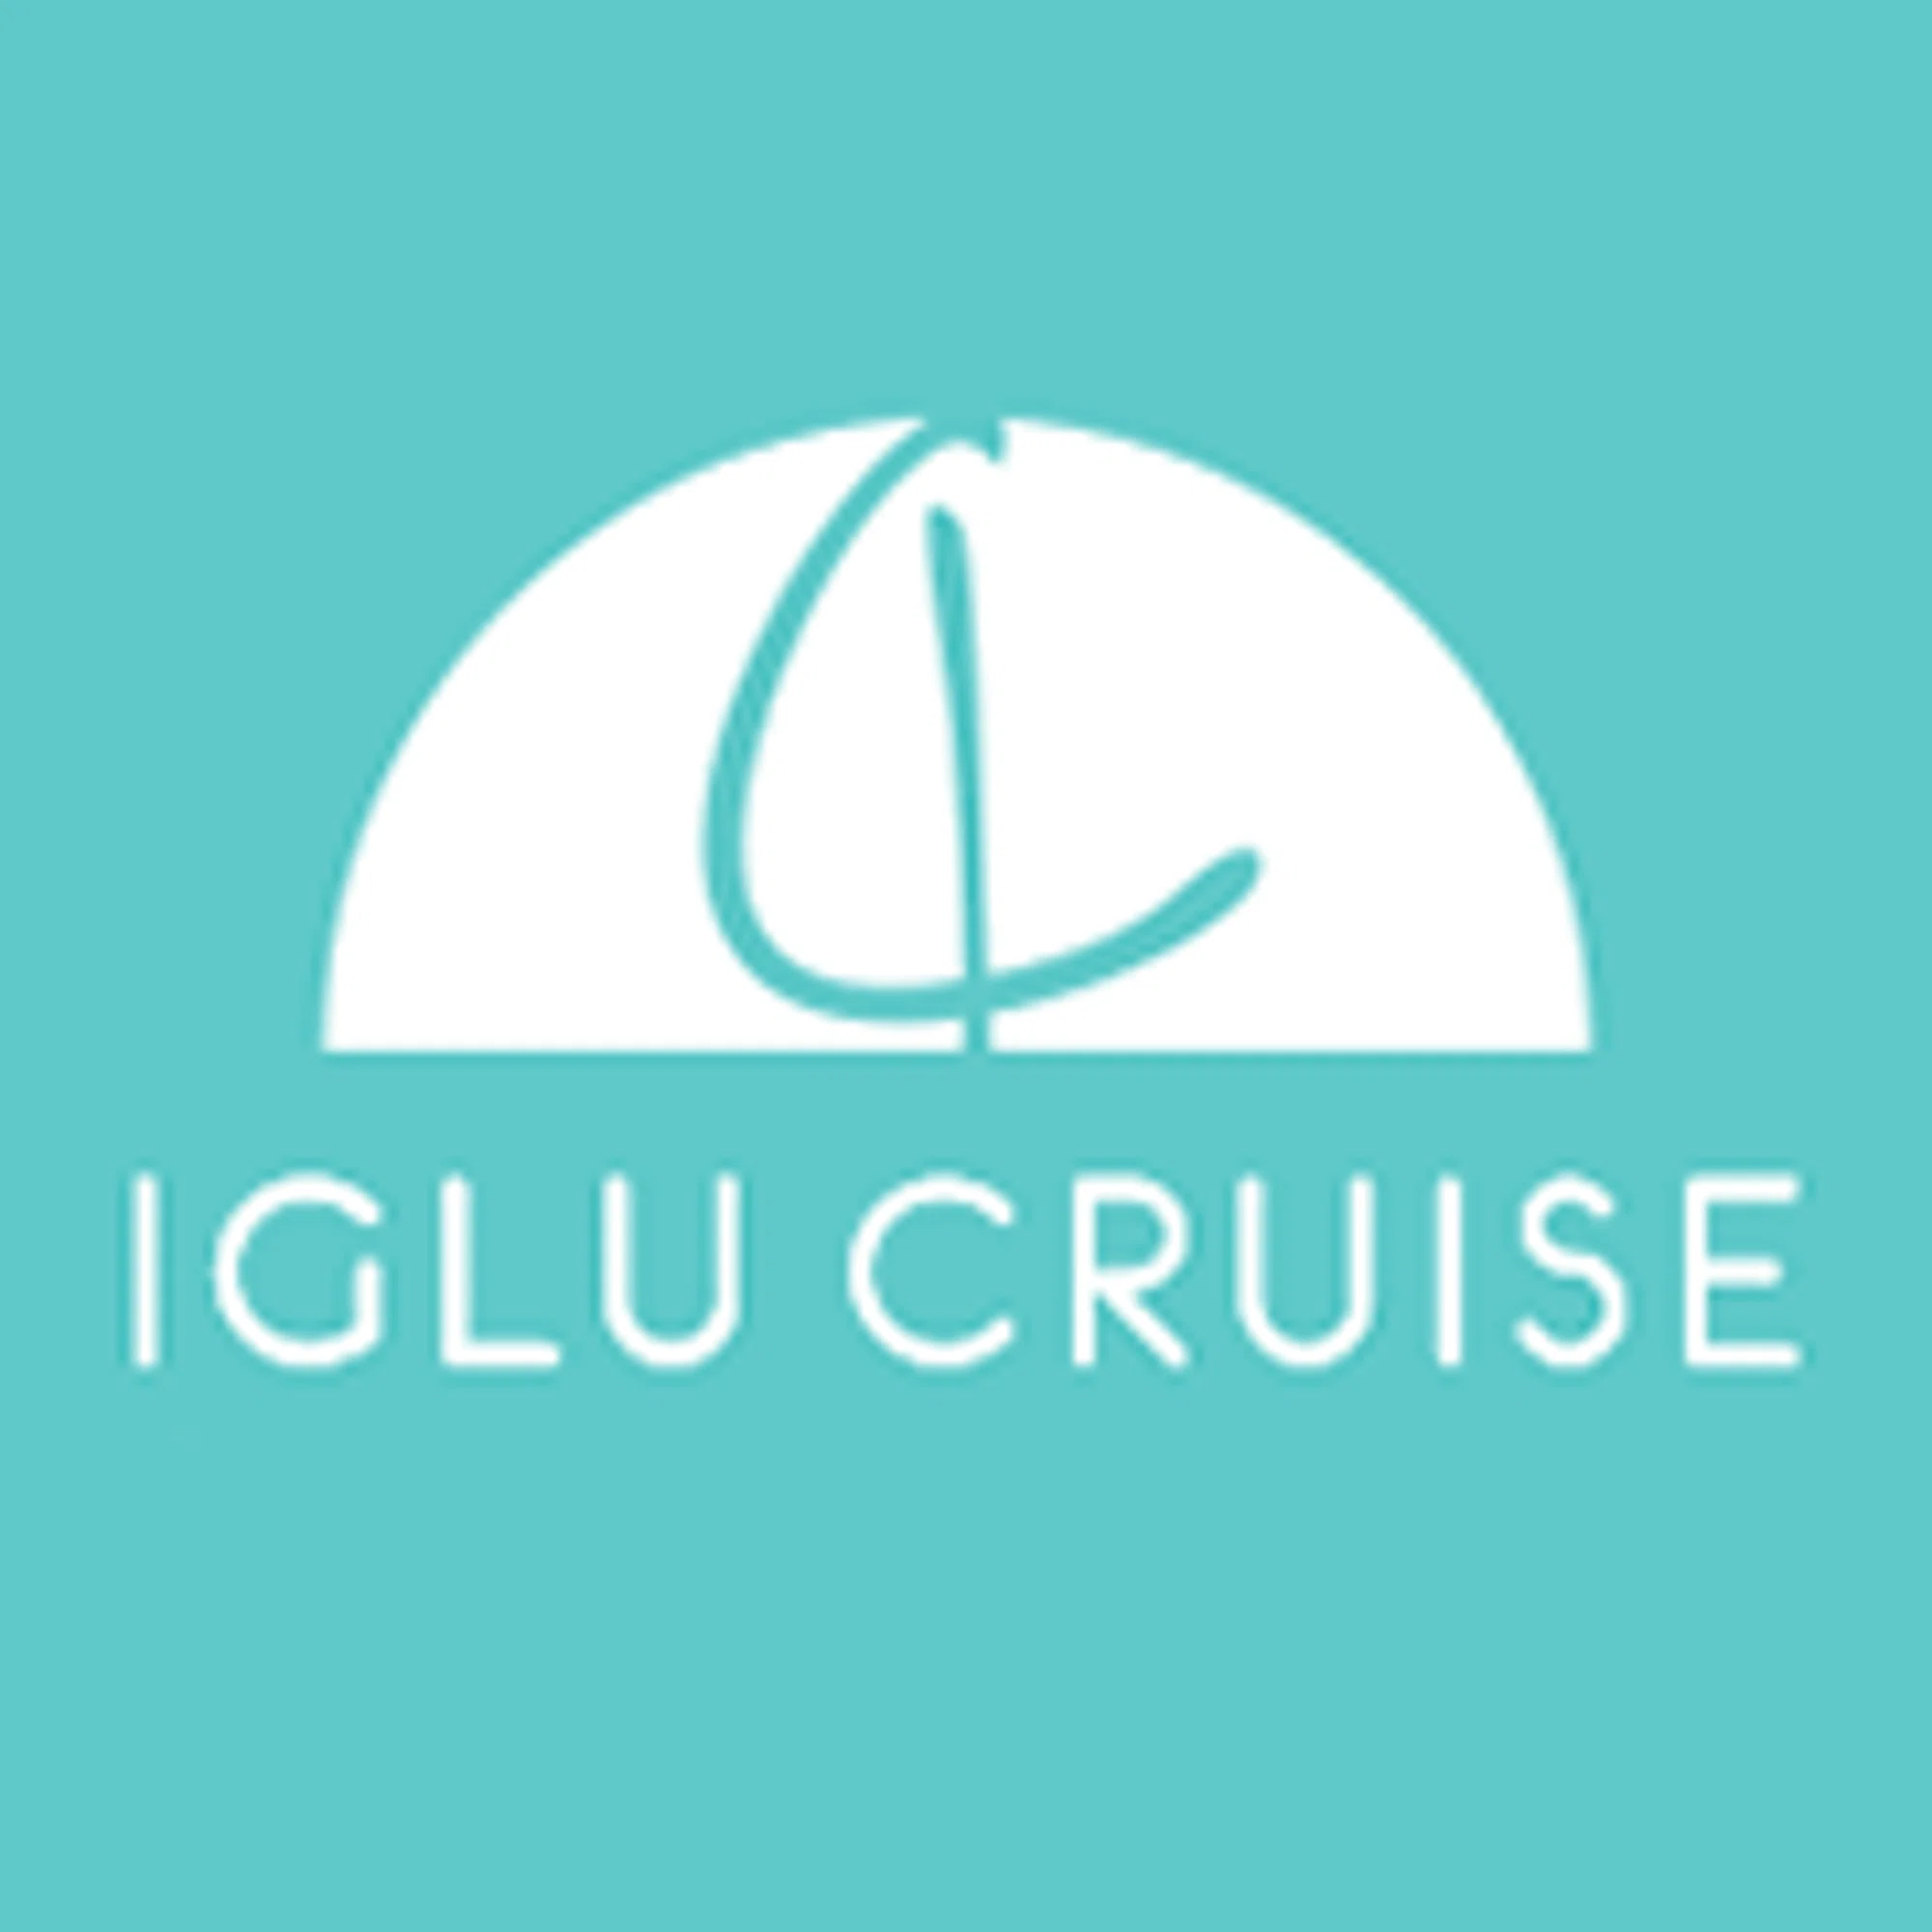 iglu cruises voucher code